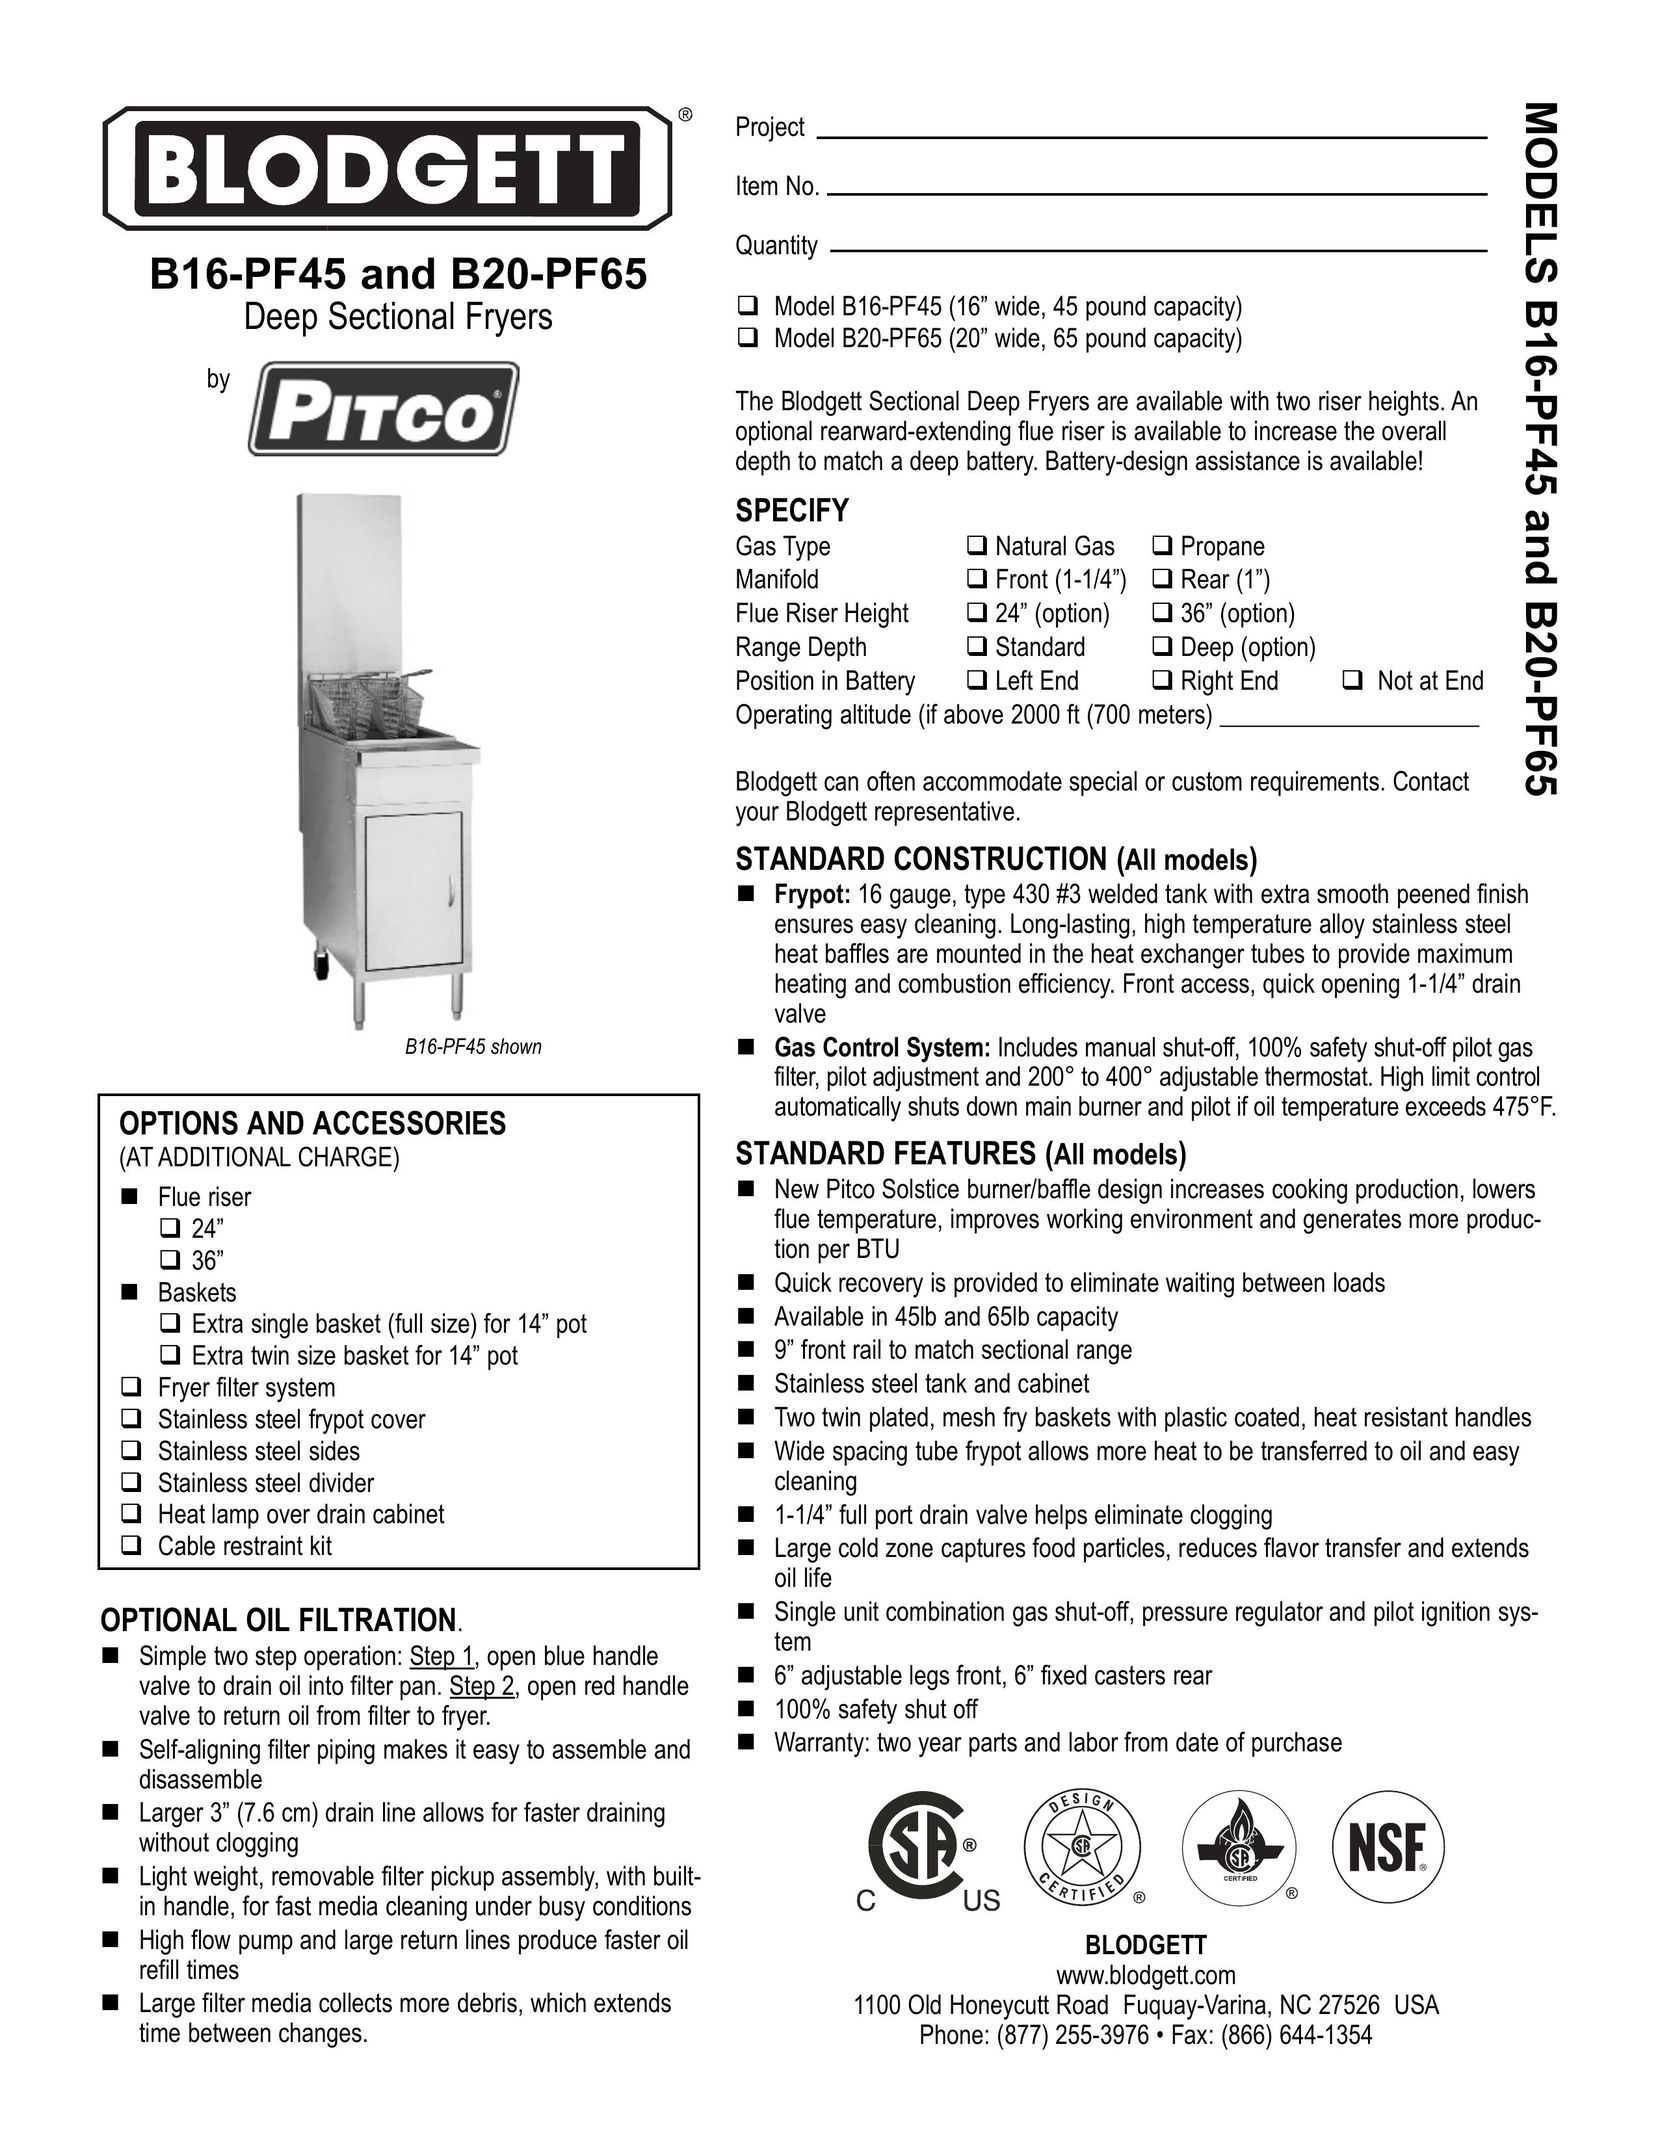 Blodgett B20-PF65 Fryer User Manual